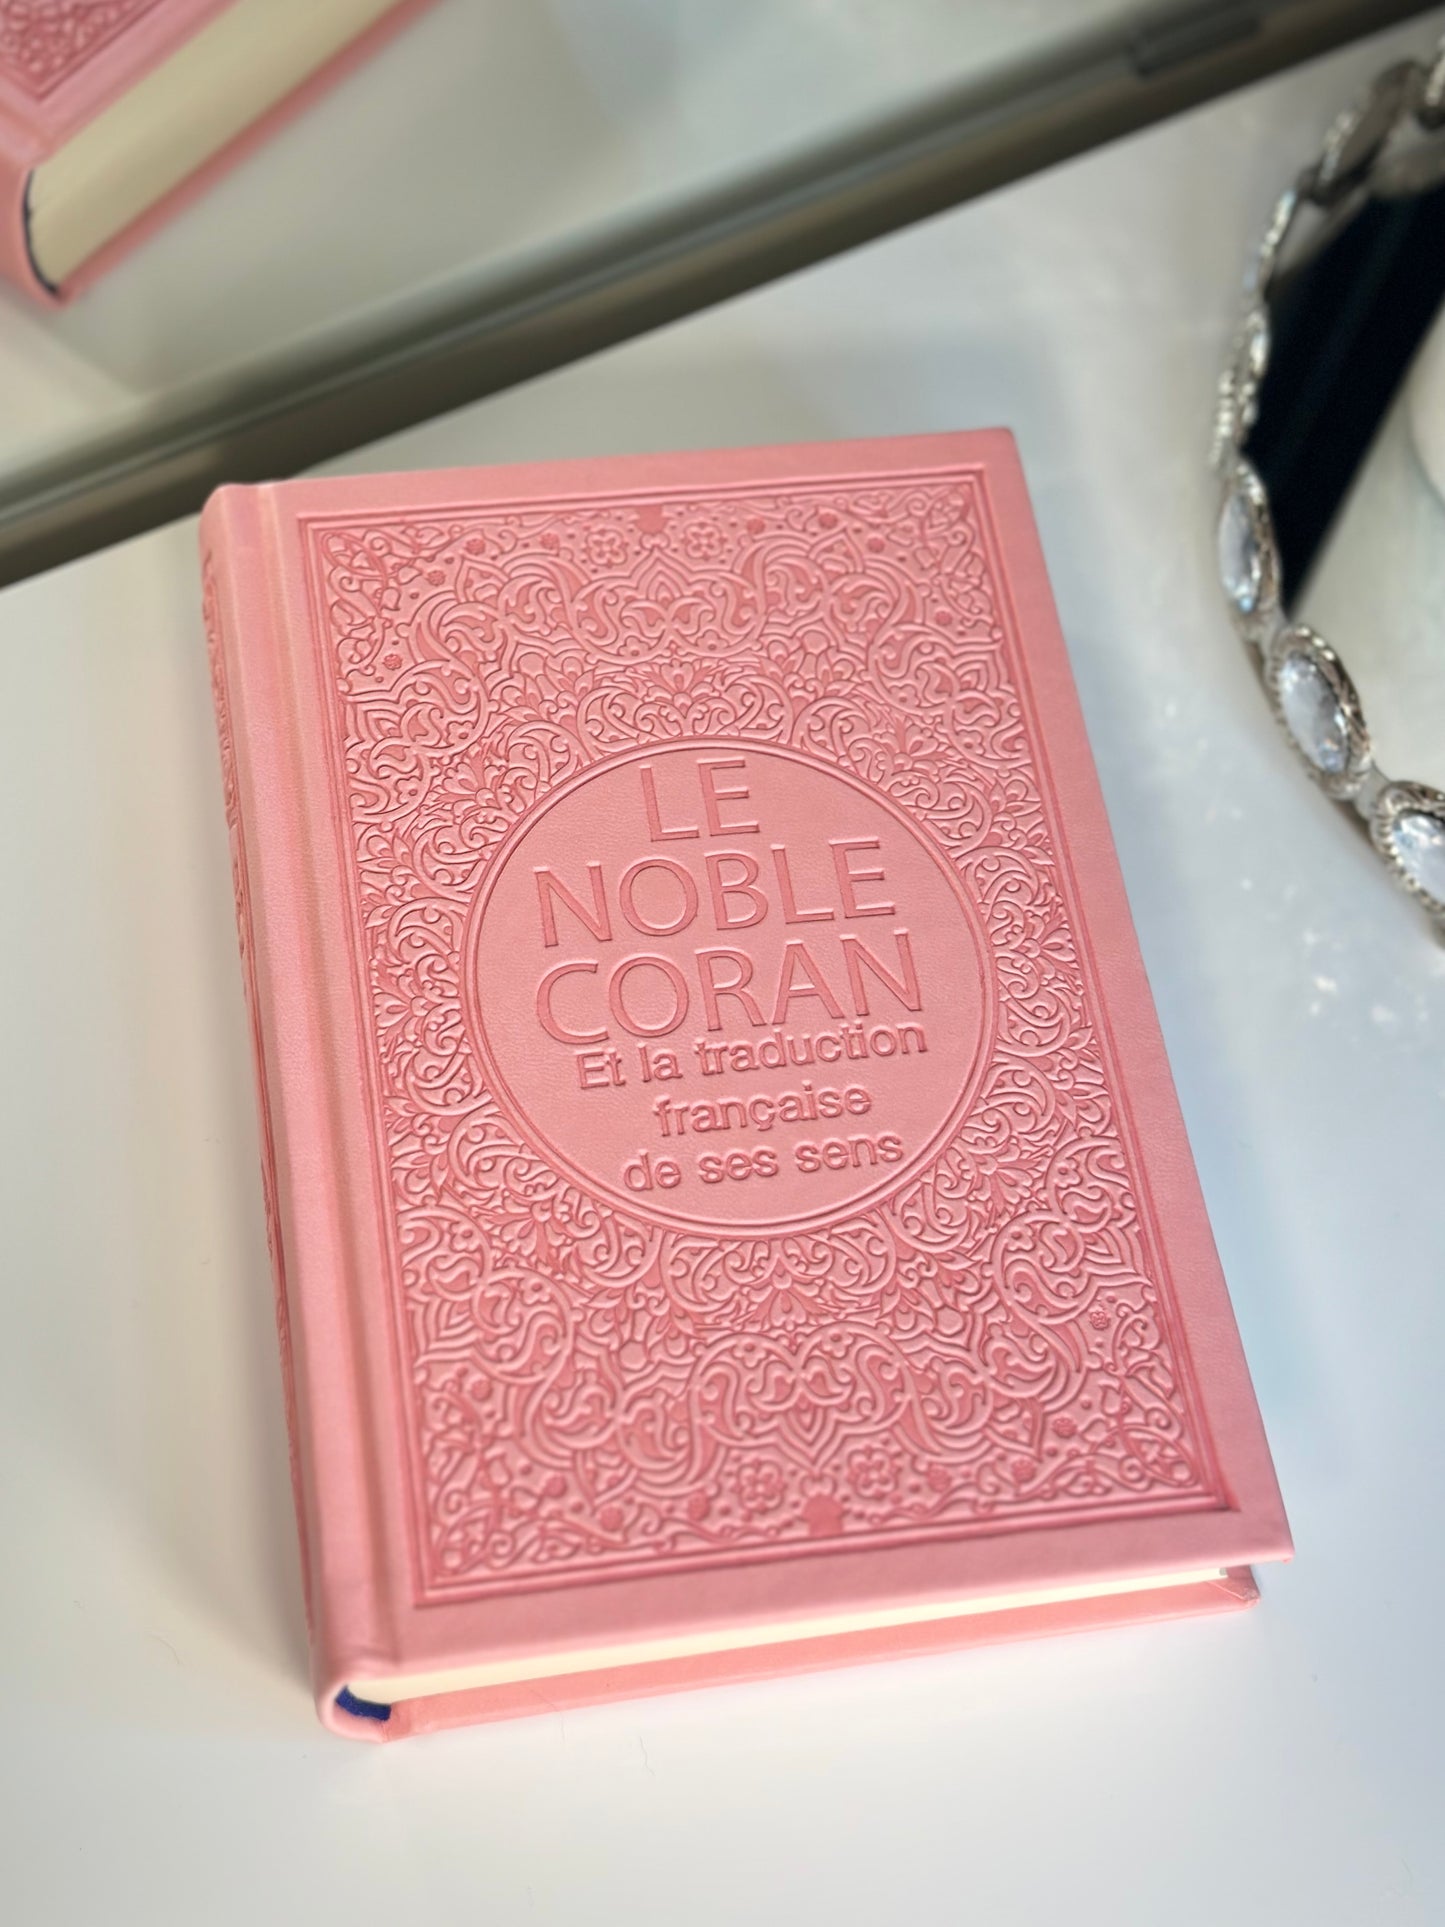 Coran arabe/francais (rose)